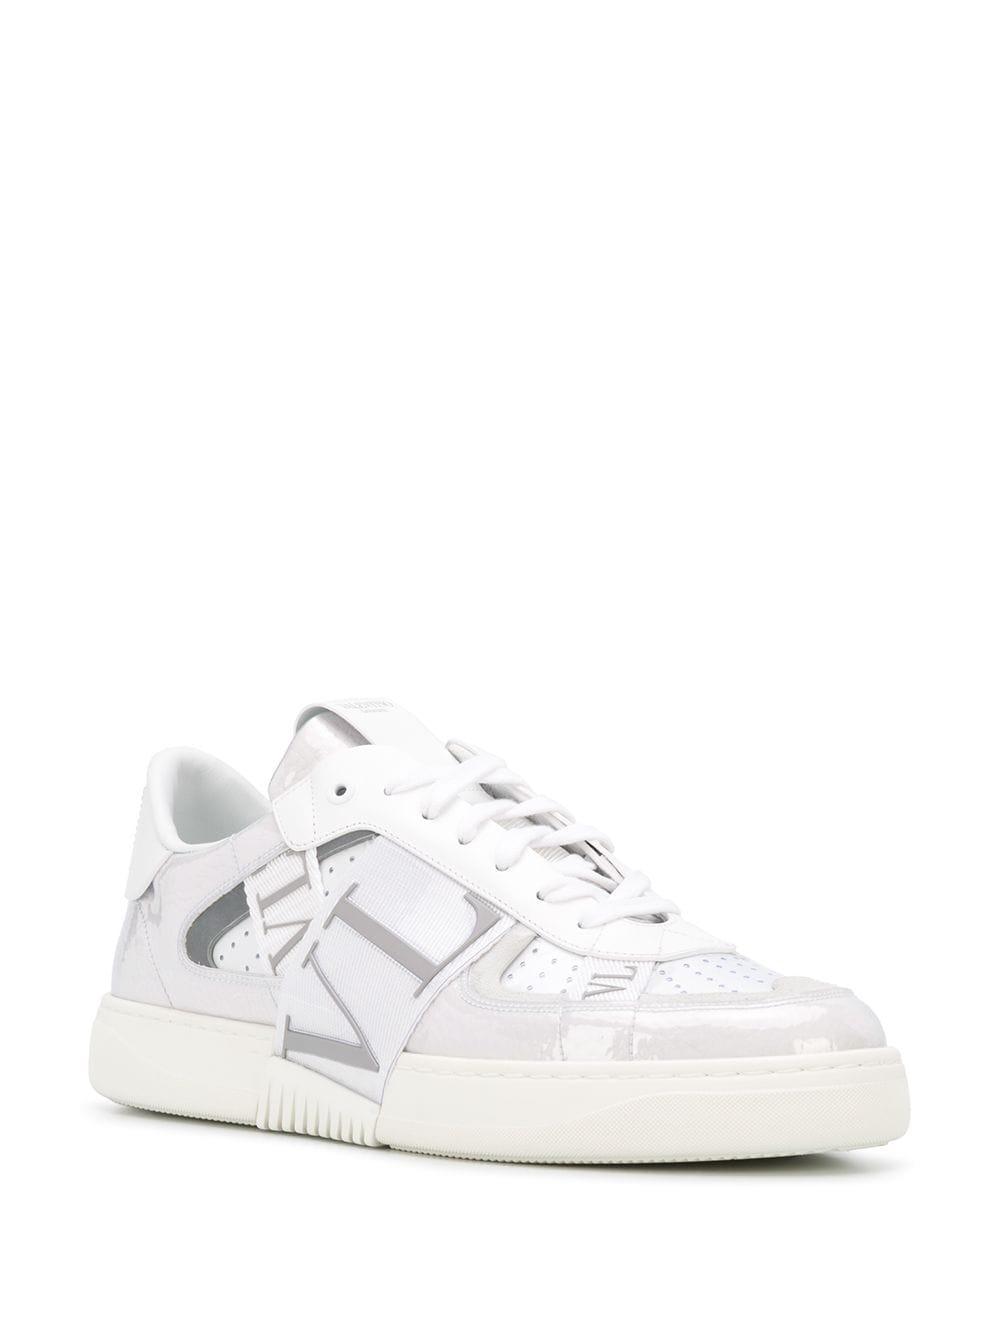 Valentino Garavani Vl7n Leather Sneakers in White for Men - Lyst